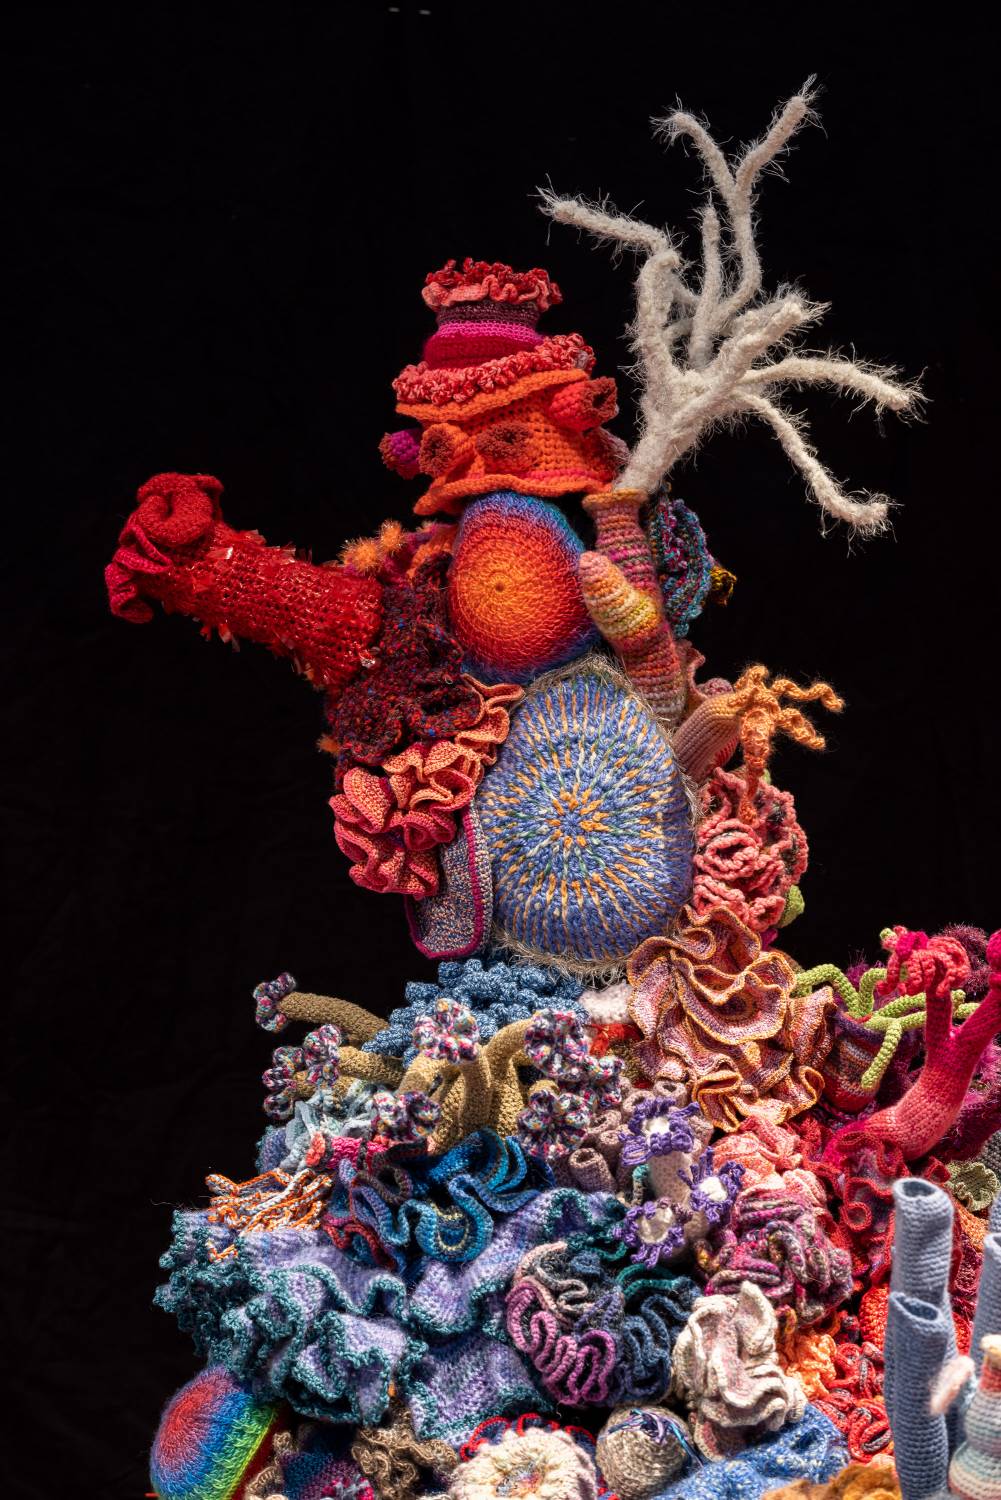 sculpture of crochet coral reef